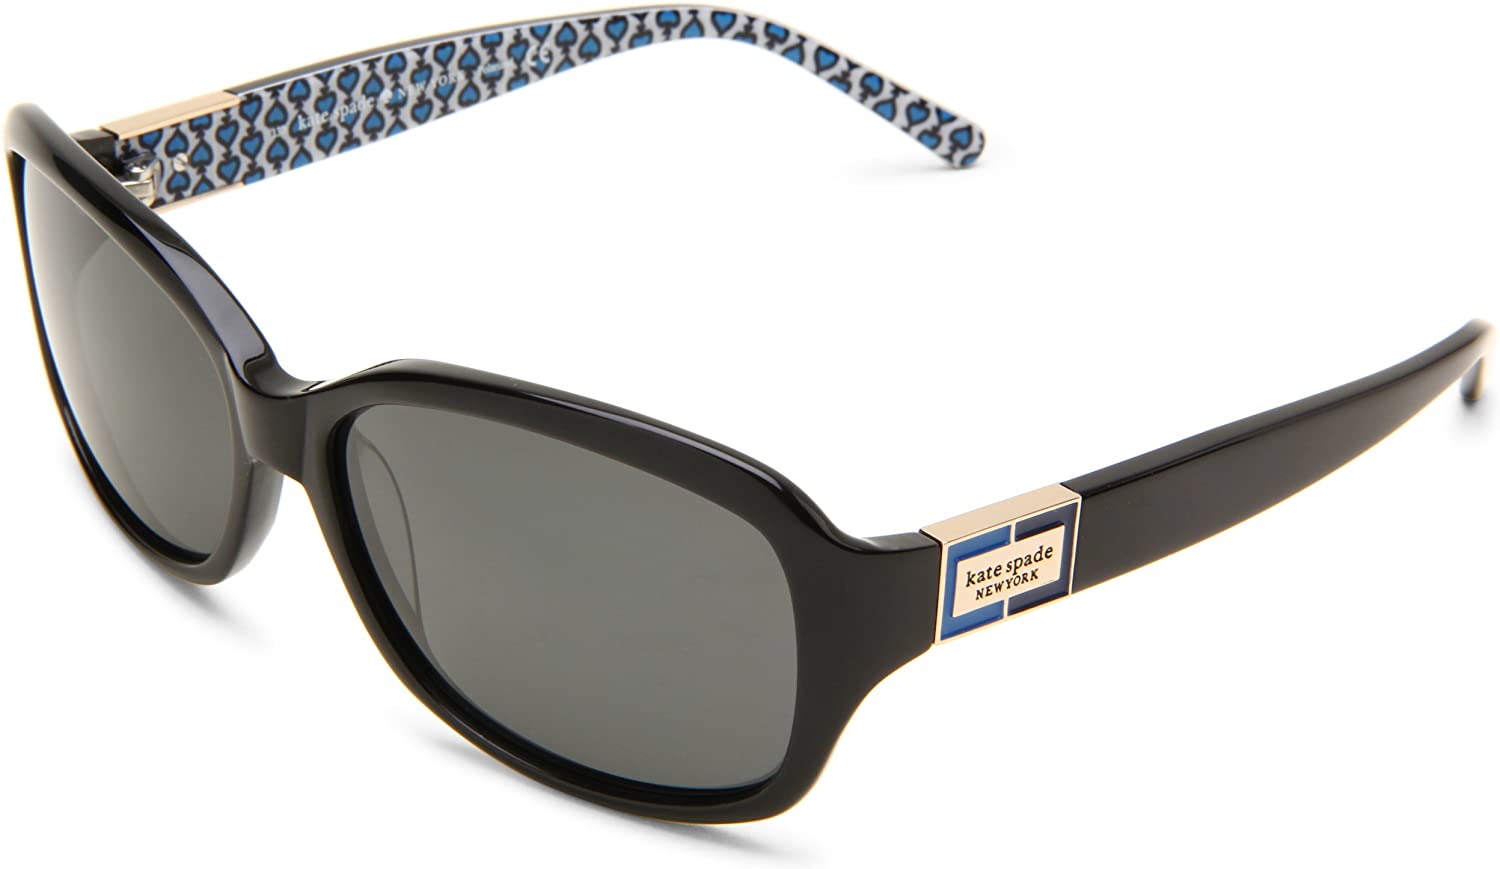 Kate Spade New York Women's Annika Rectangular Sunglasses